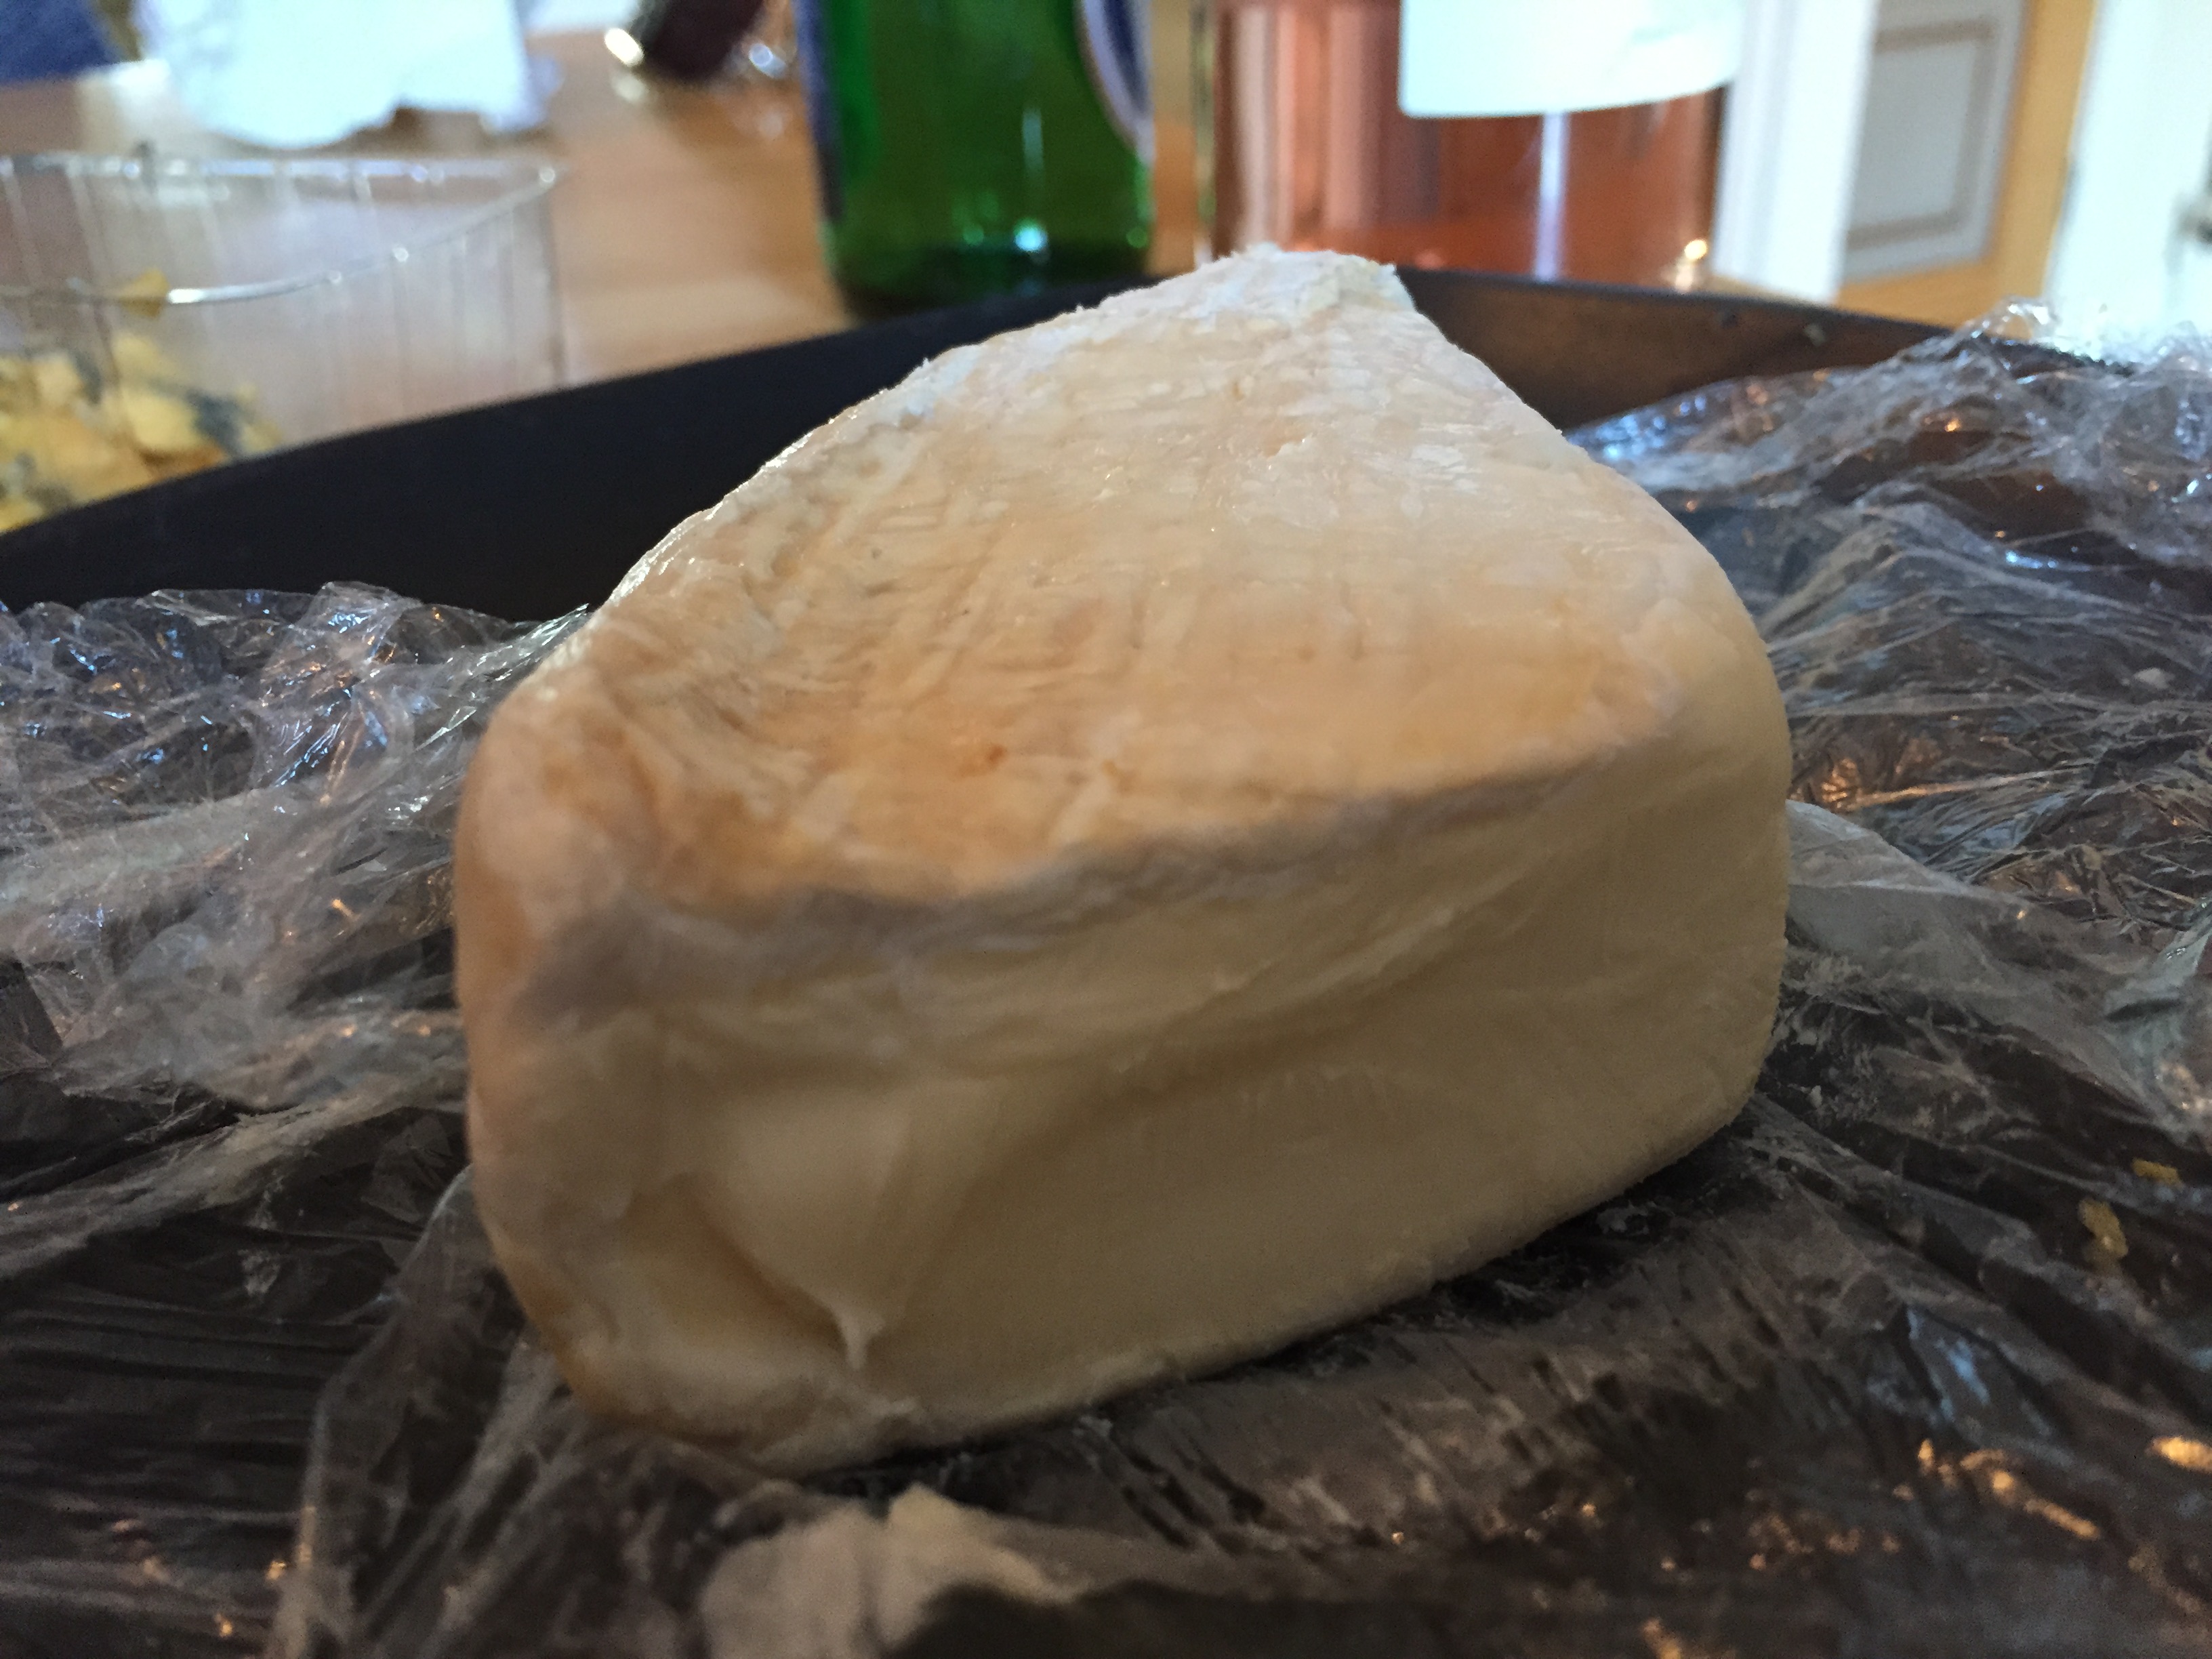 Chanteraine cheese